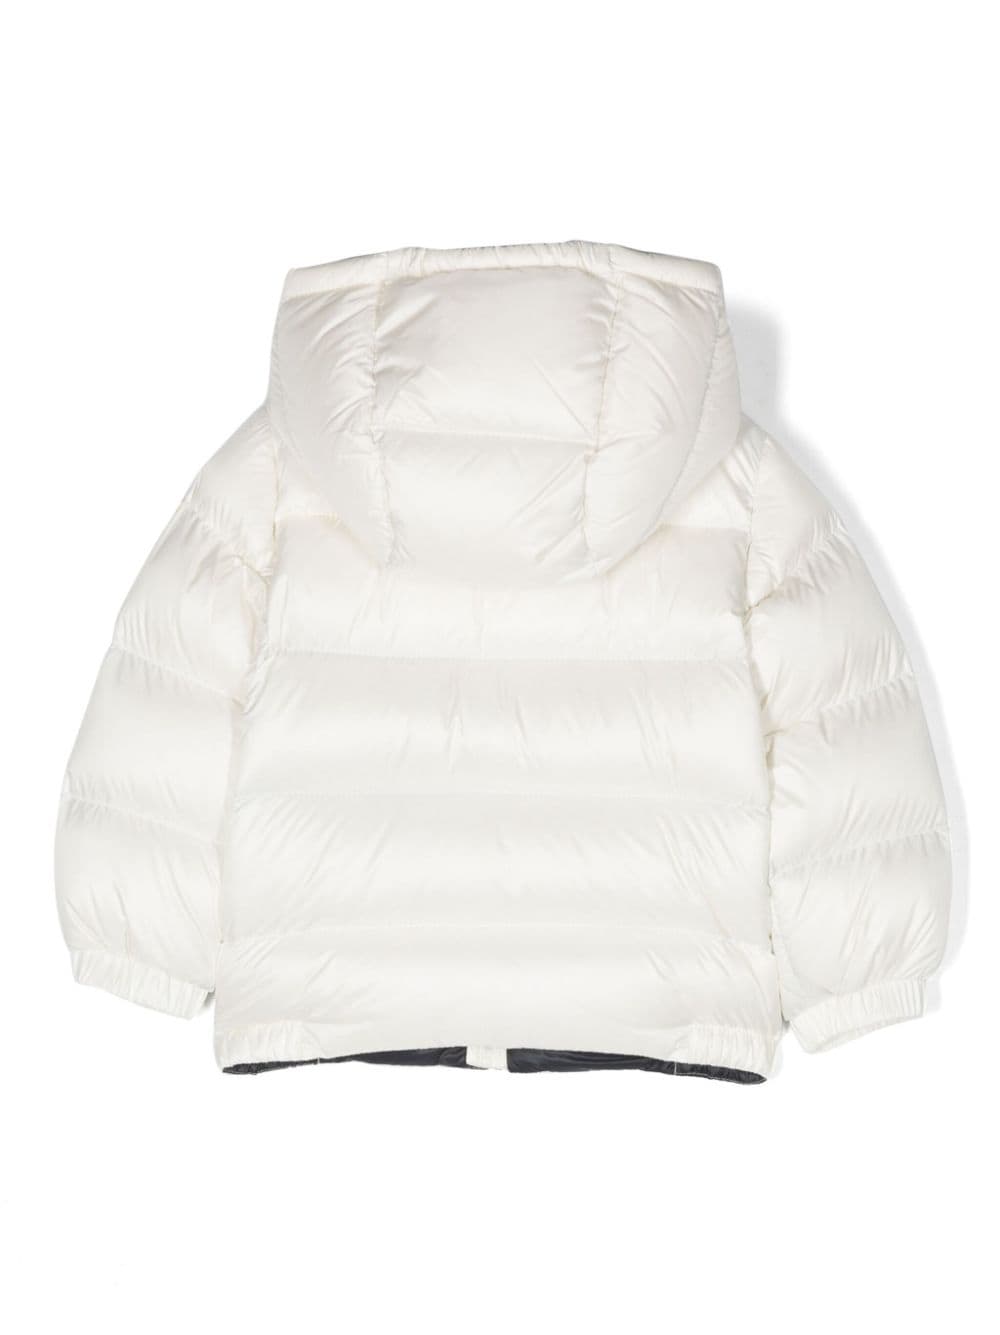 New Macaire white jacket for newborn girls